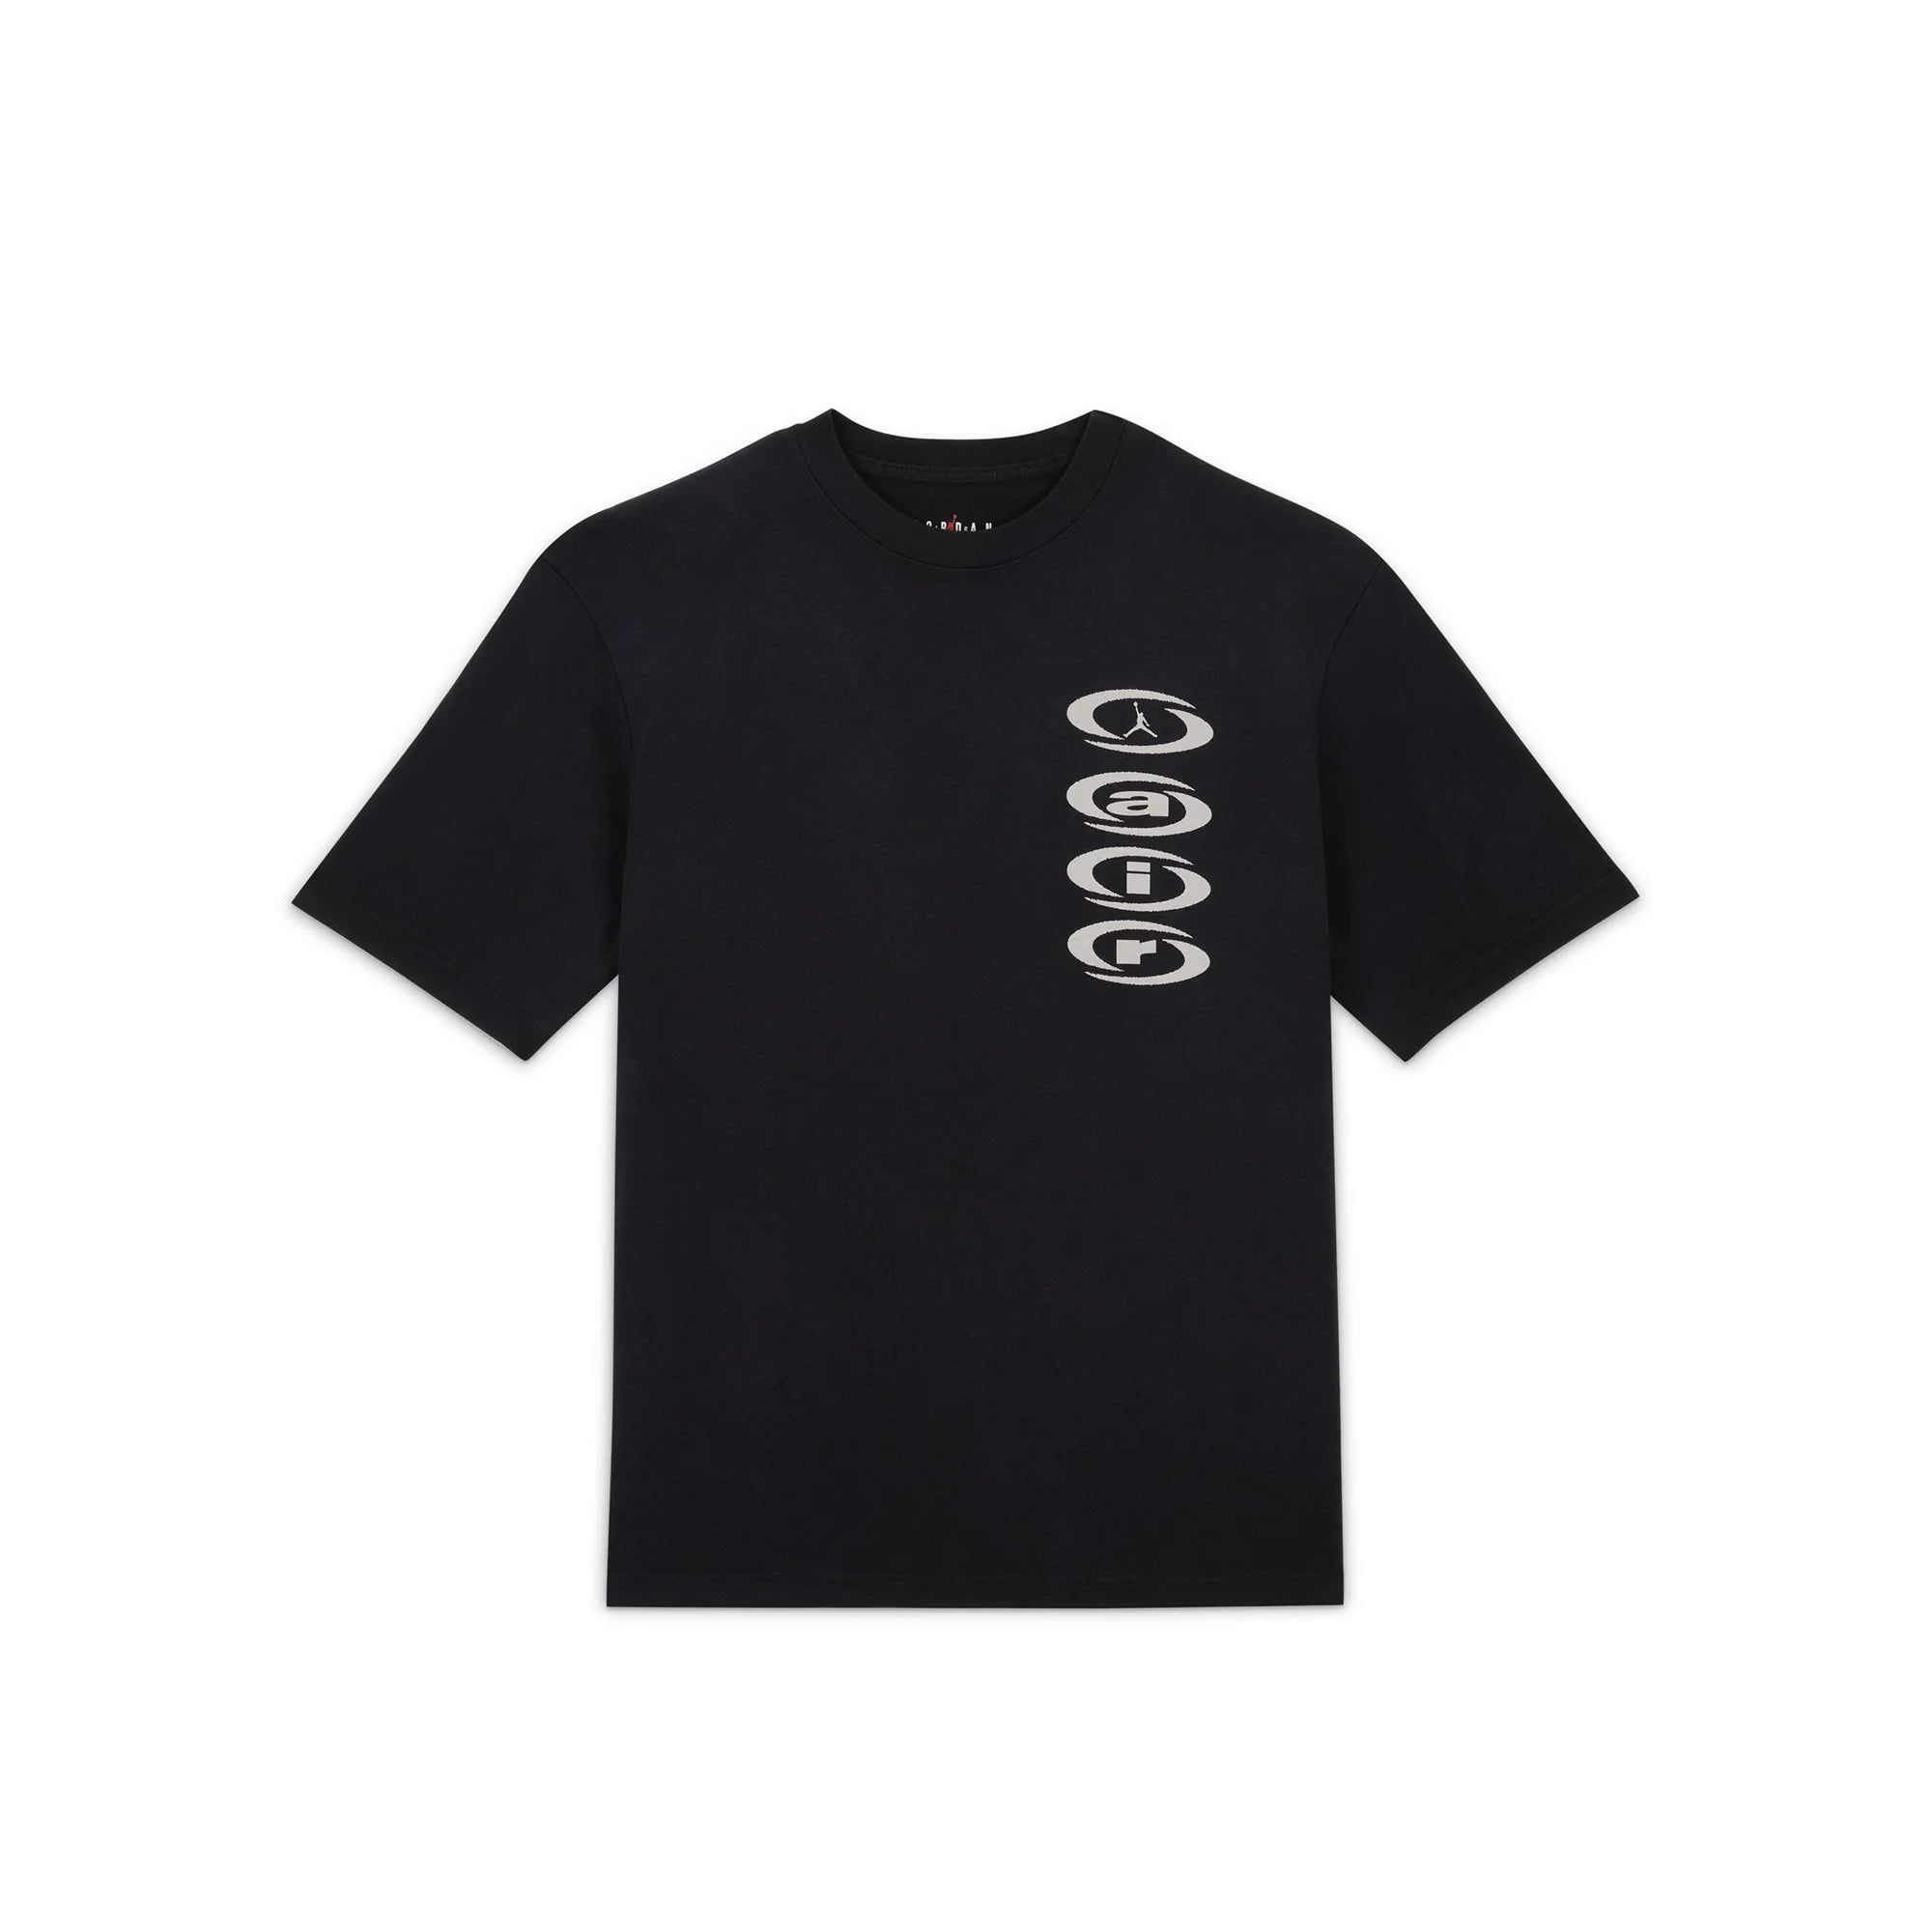 Jordan x Travis Scott Men's T-Shirt Black